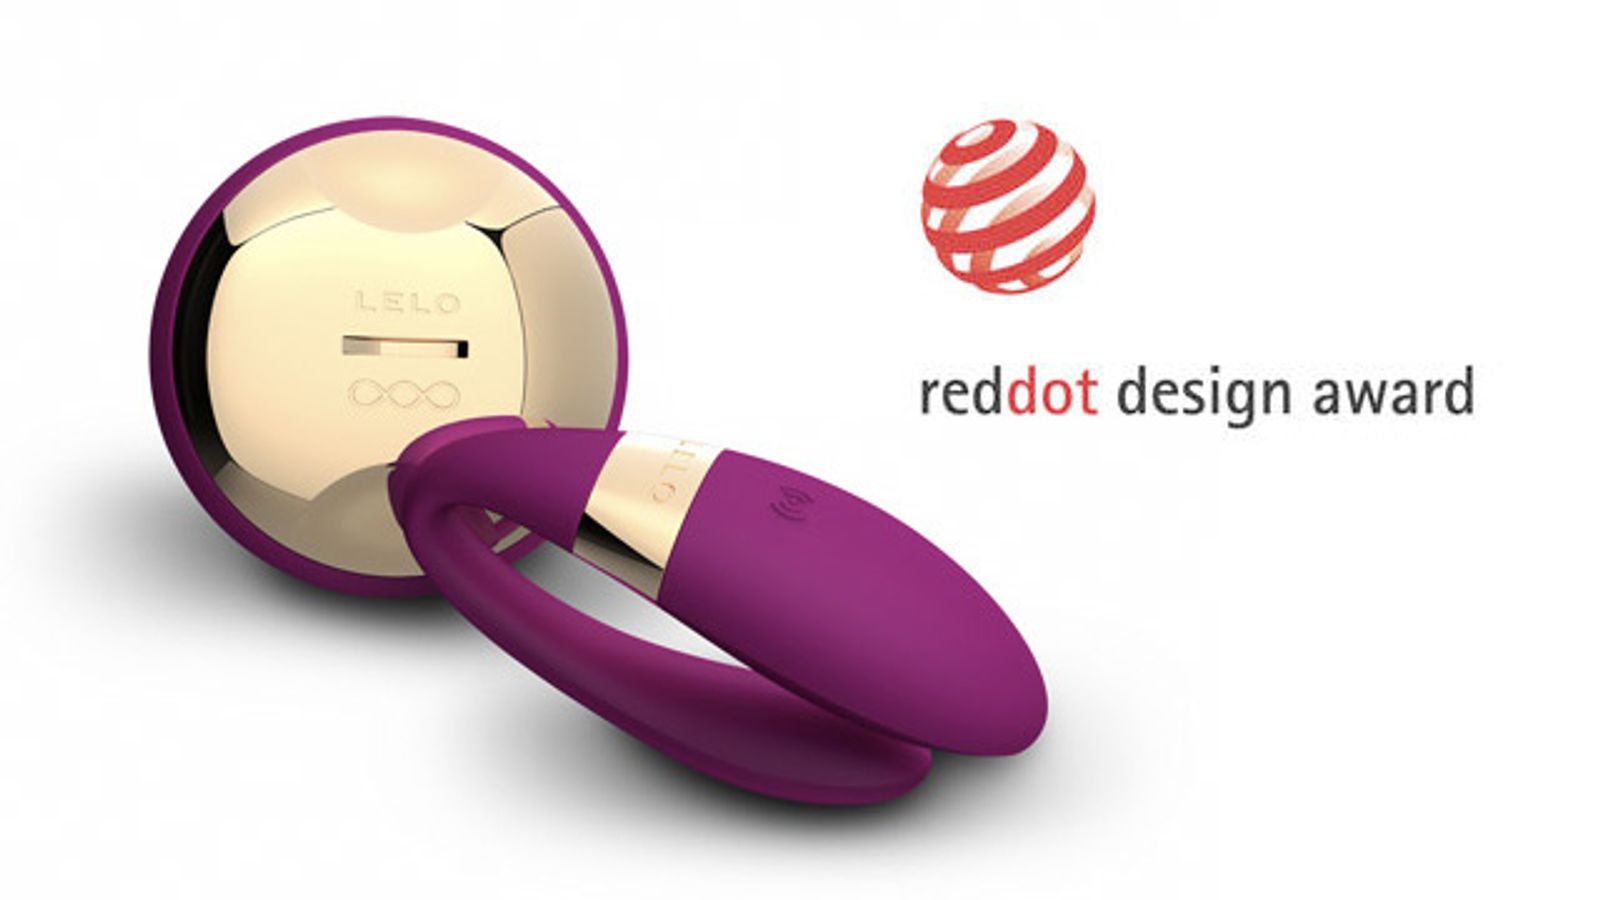 LELO’s Tiani Wins Top Red Dot Design Award 2012